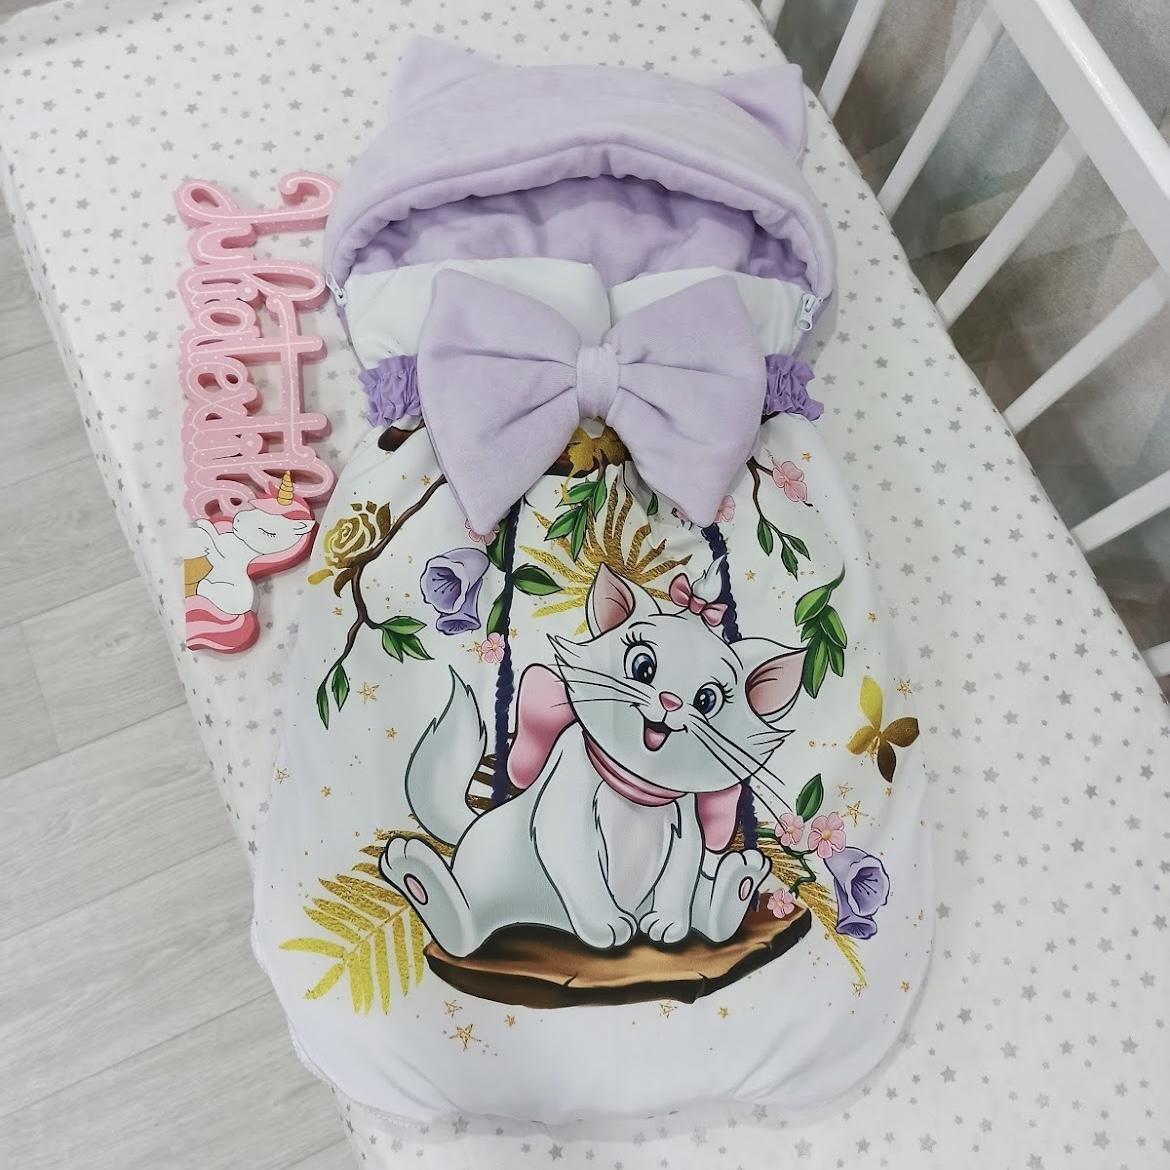 Sleeping bag with minu print with purple white flowers